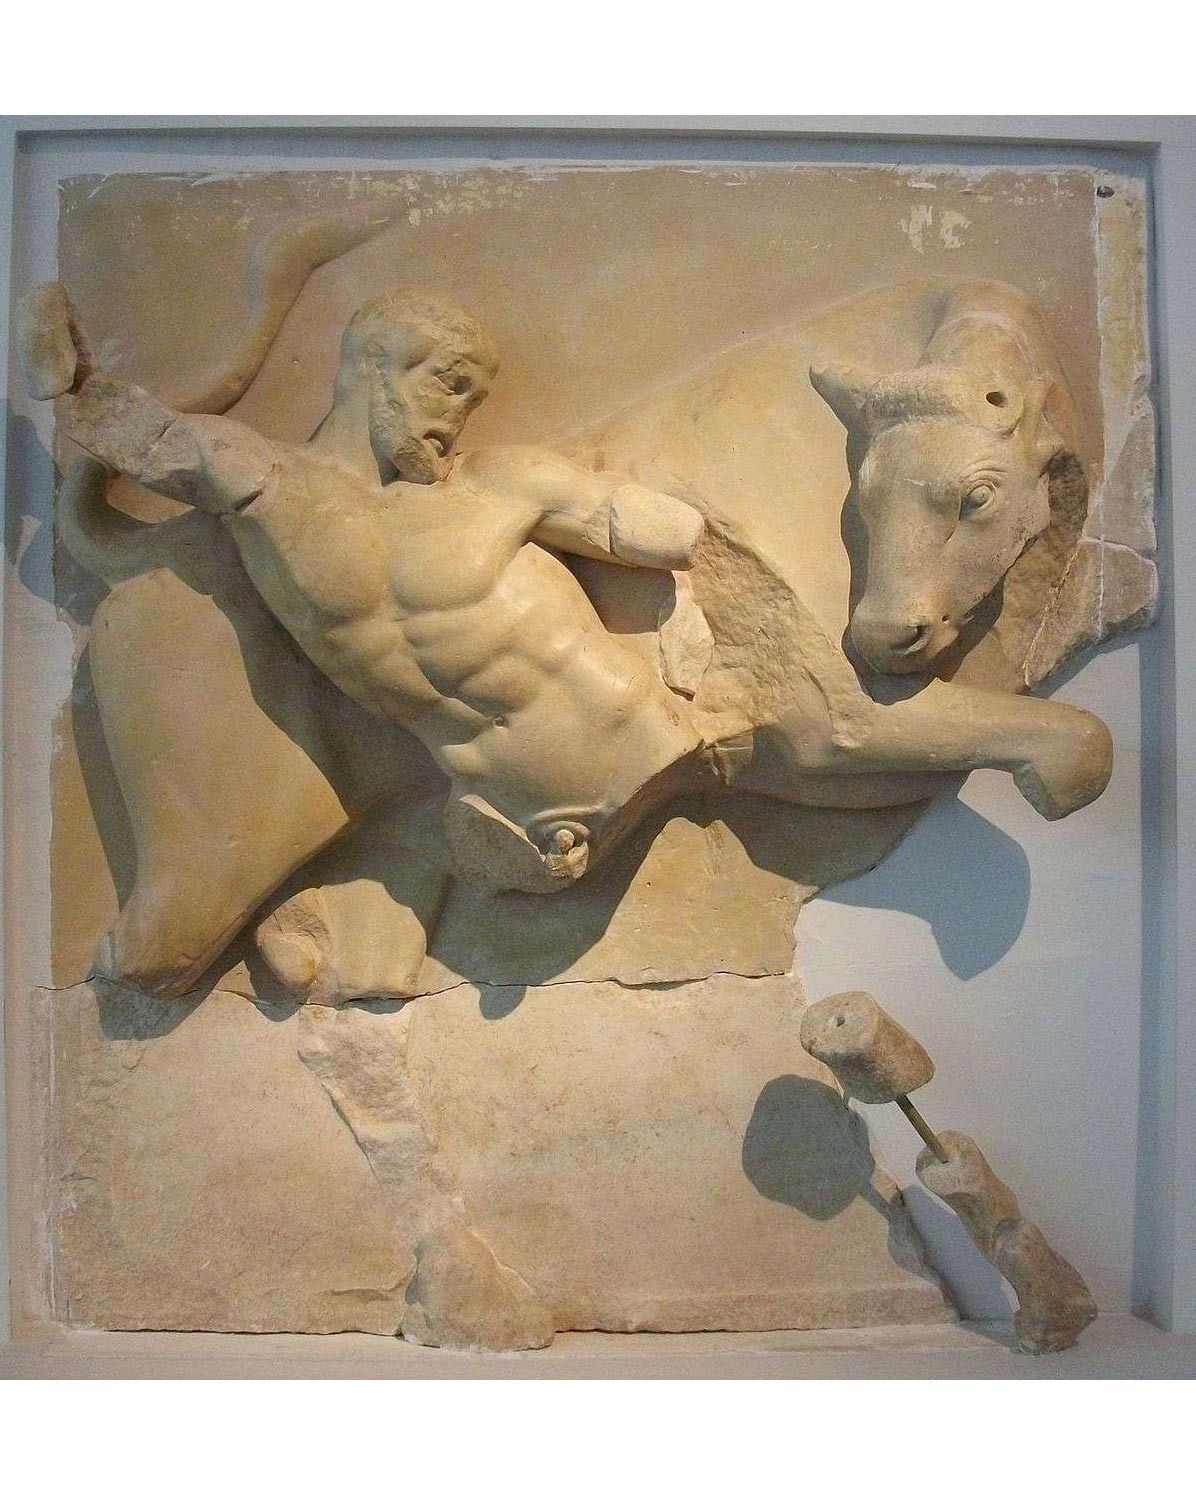 Heracles and the Cretan Bull